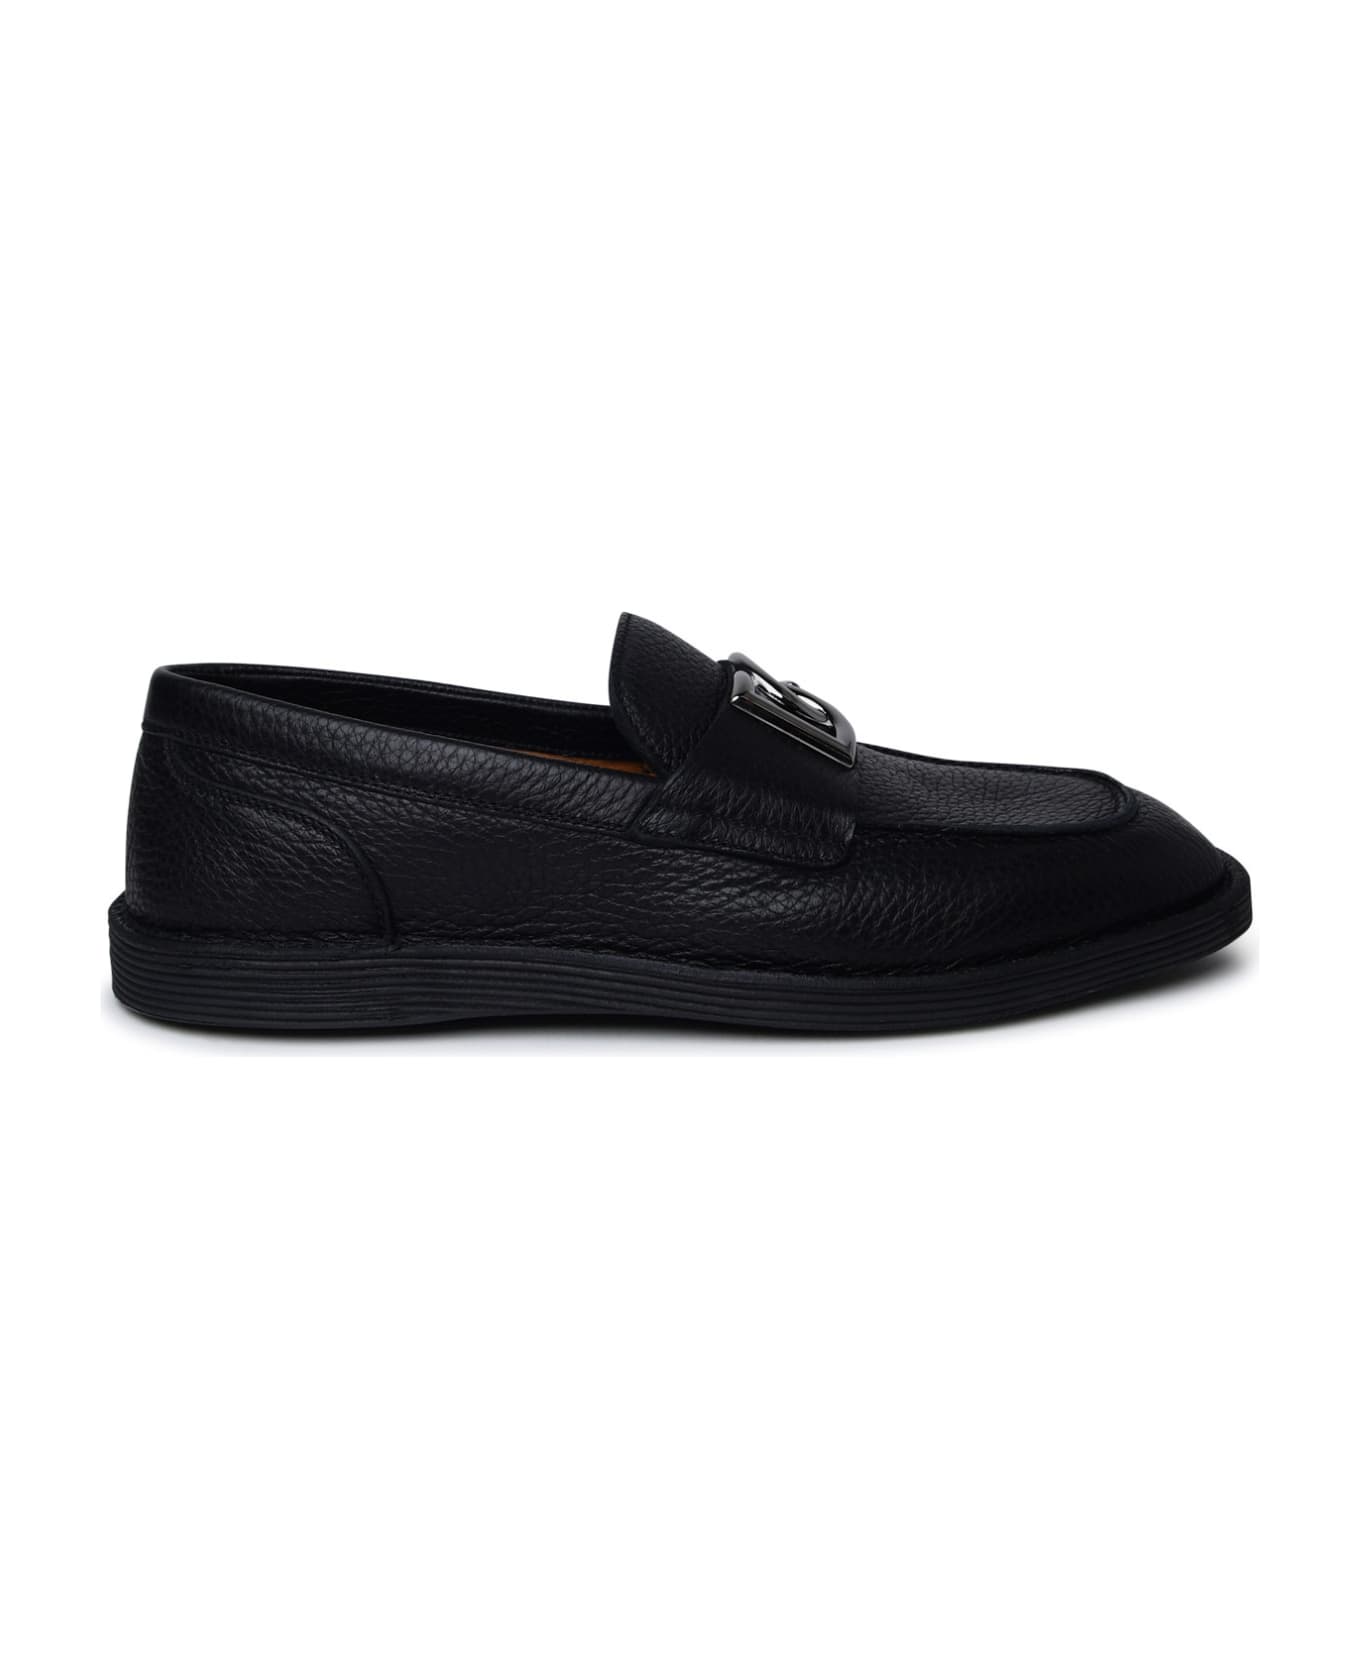 Dolce & Gabbana Black Leather Loafers - Black